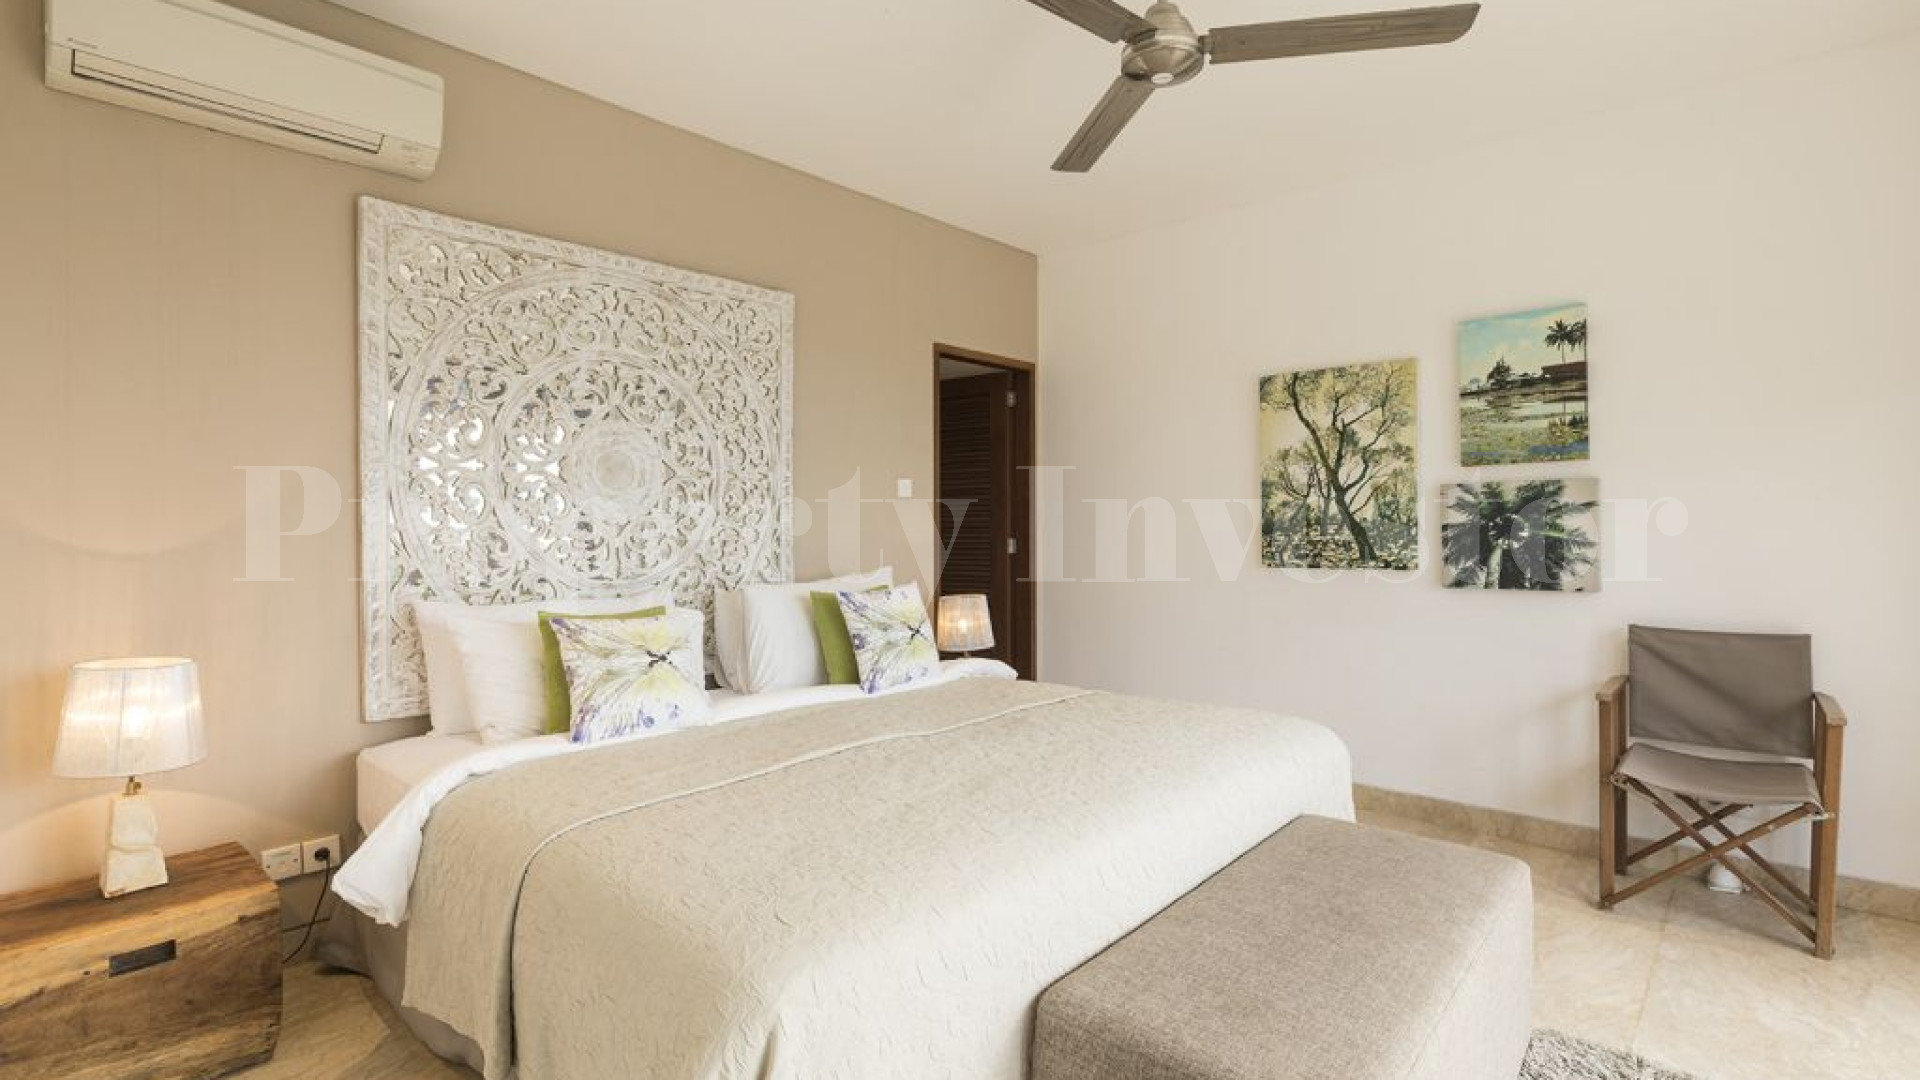 6 Bedroom Luxury Hillside Villa with Unobstructed Ocean Views for Sale in Bukit, Bali